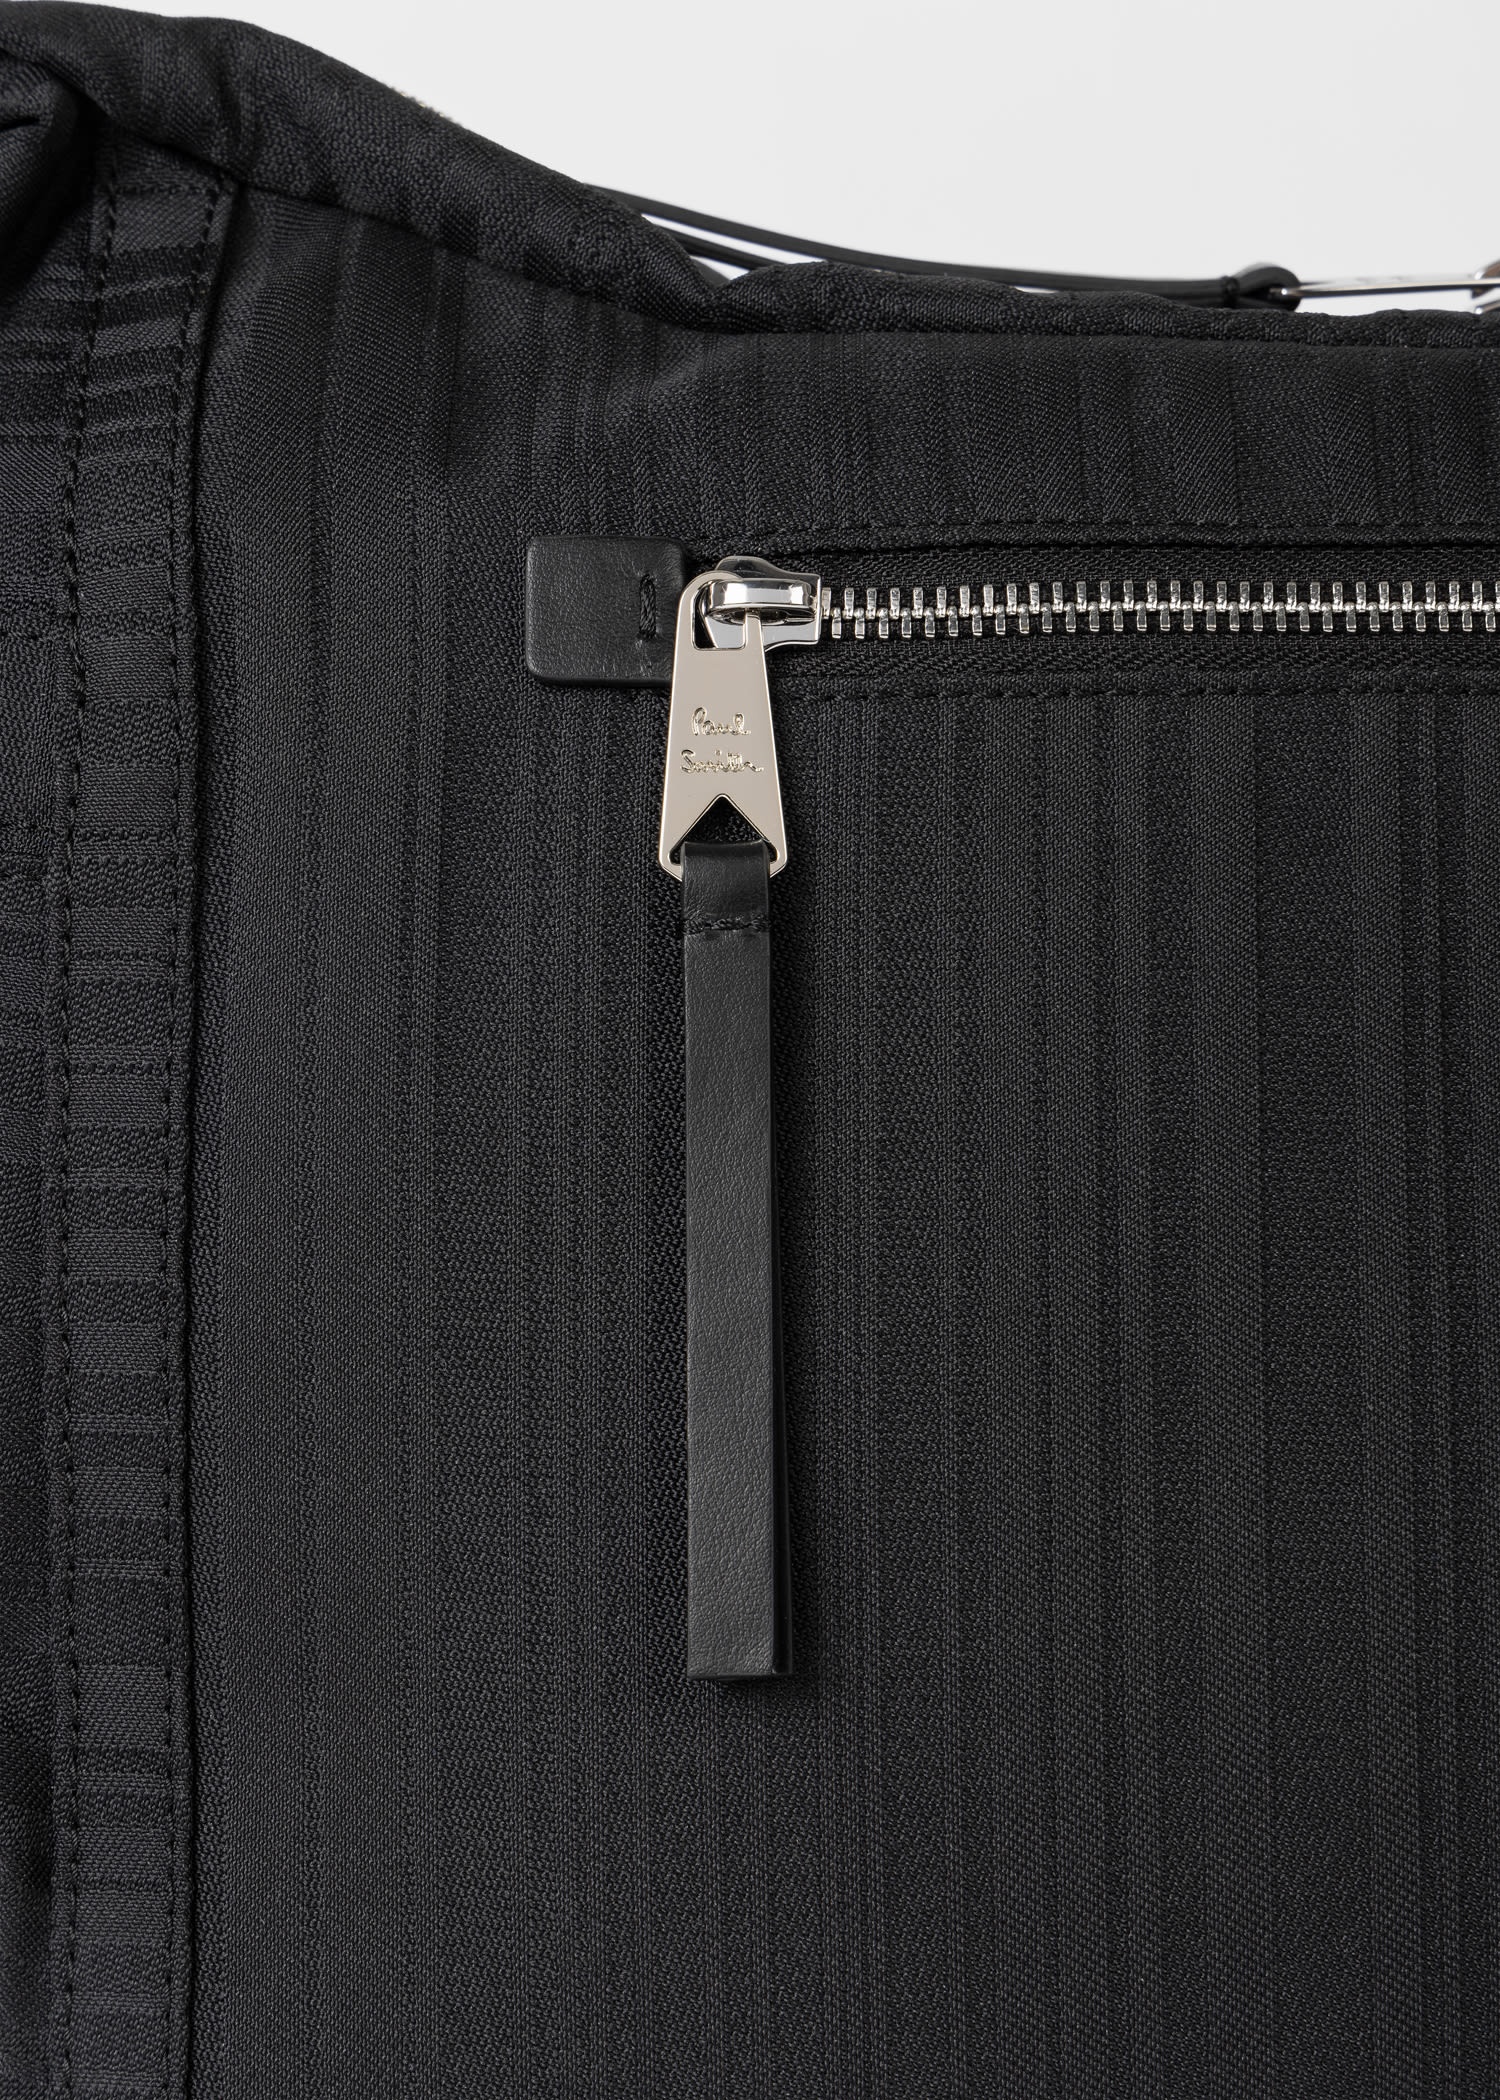 Black Shadow Stripe-embossed leather cross-body bag, Paul Smith